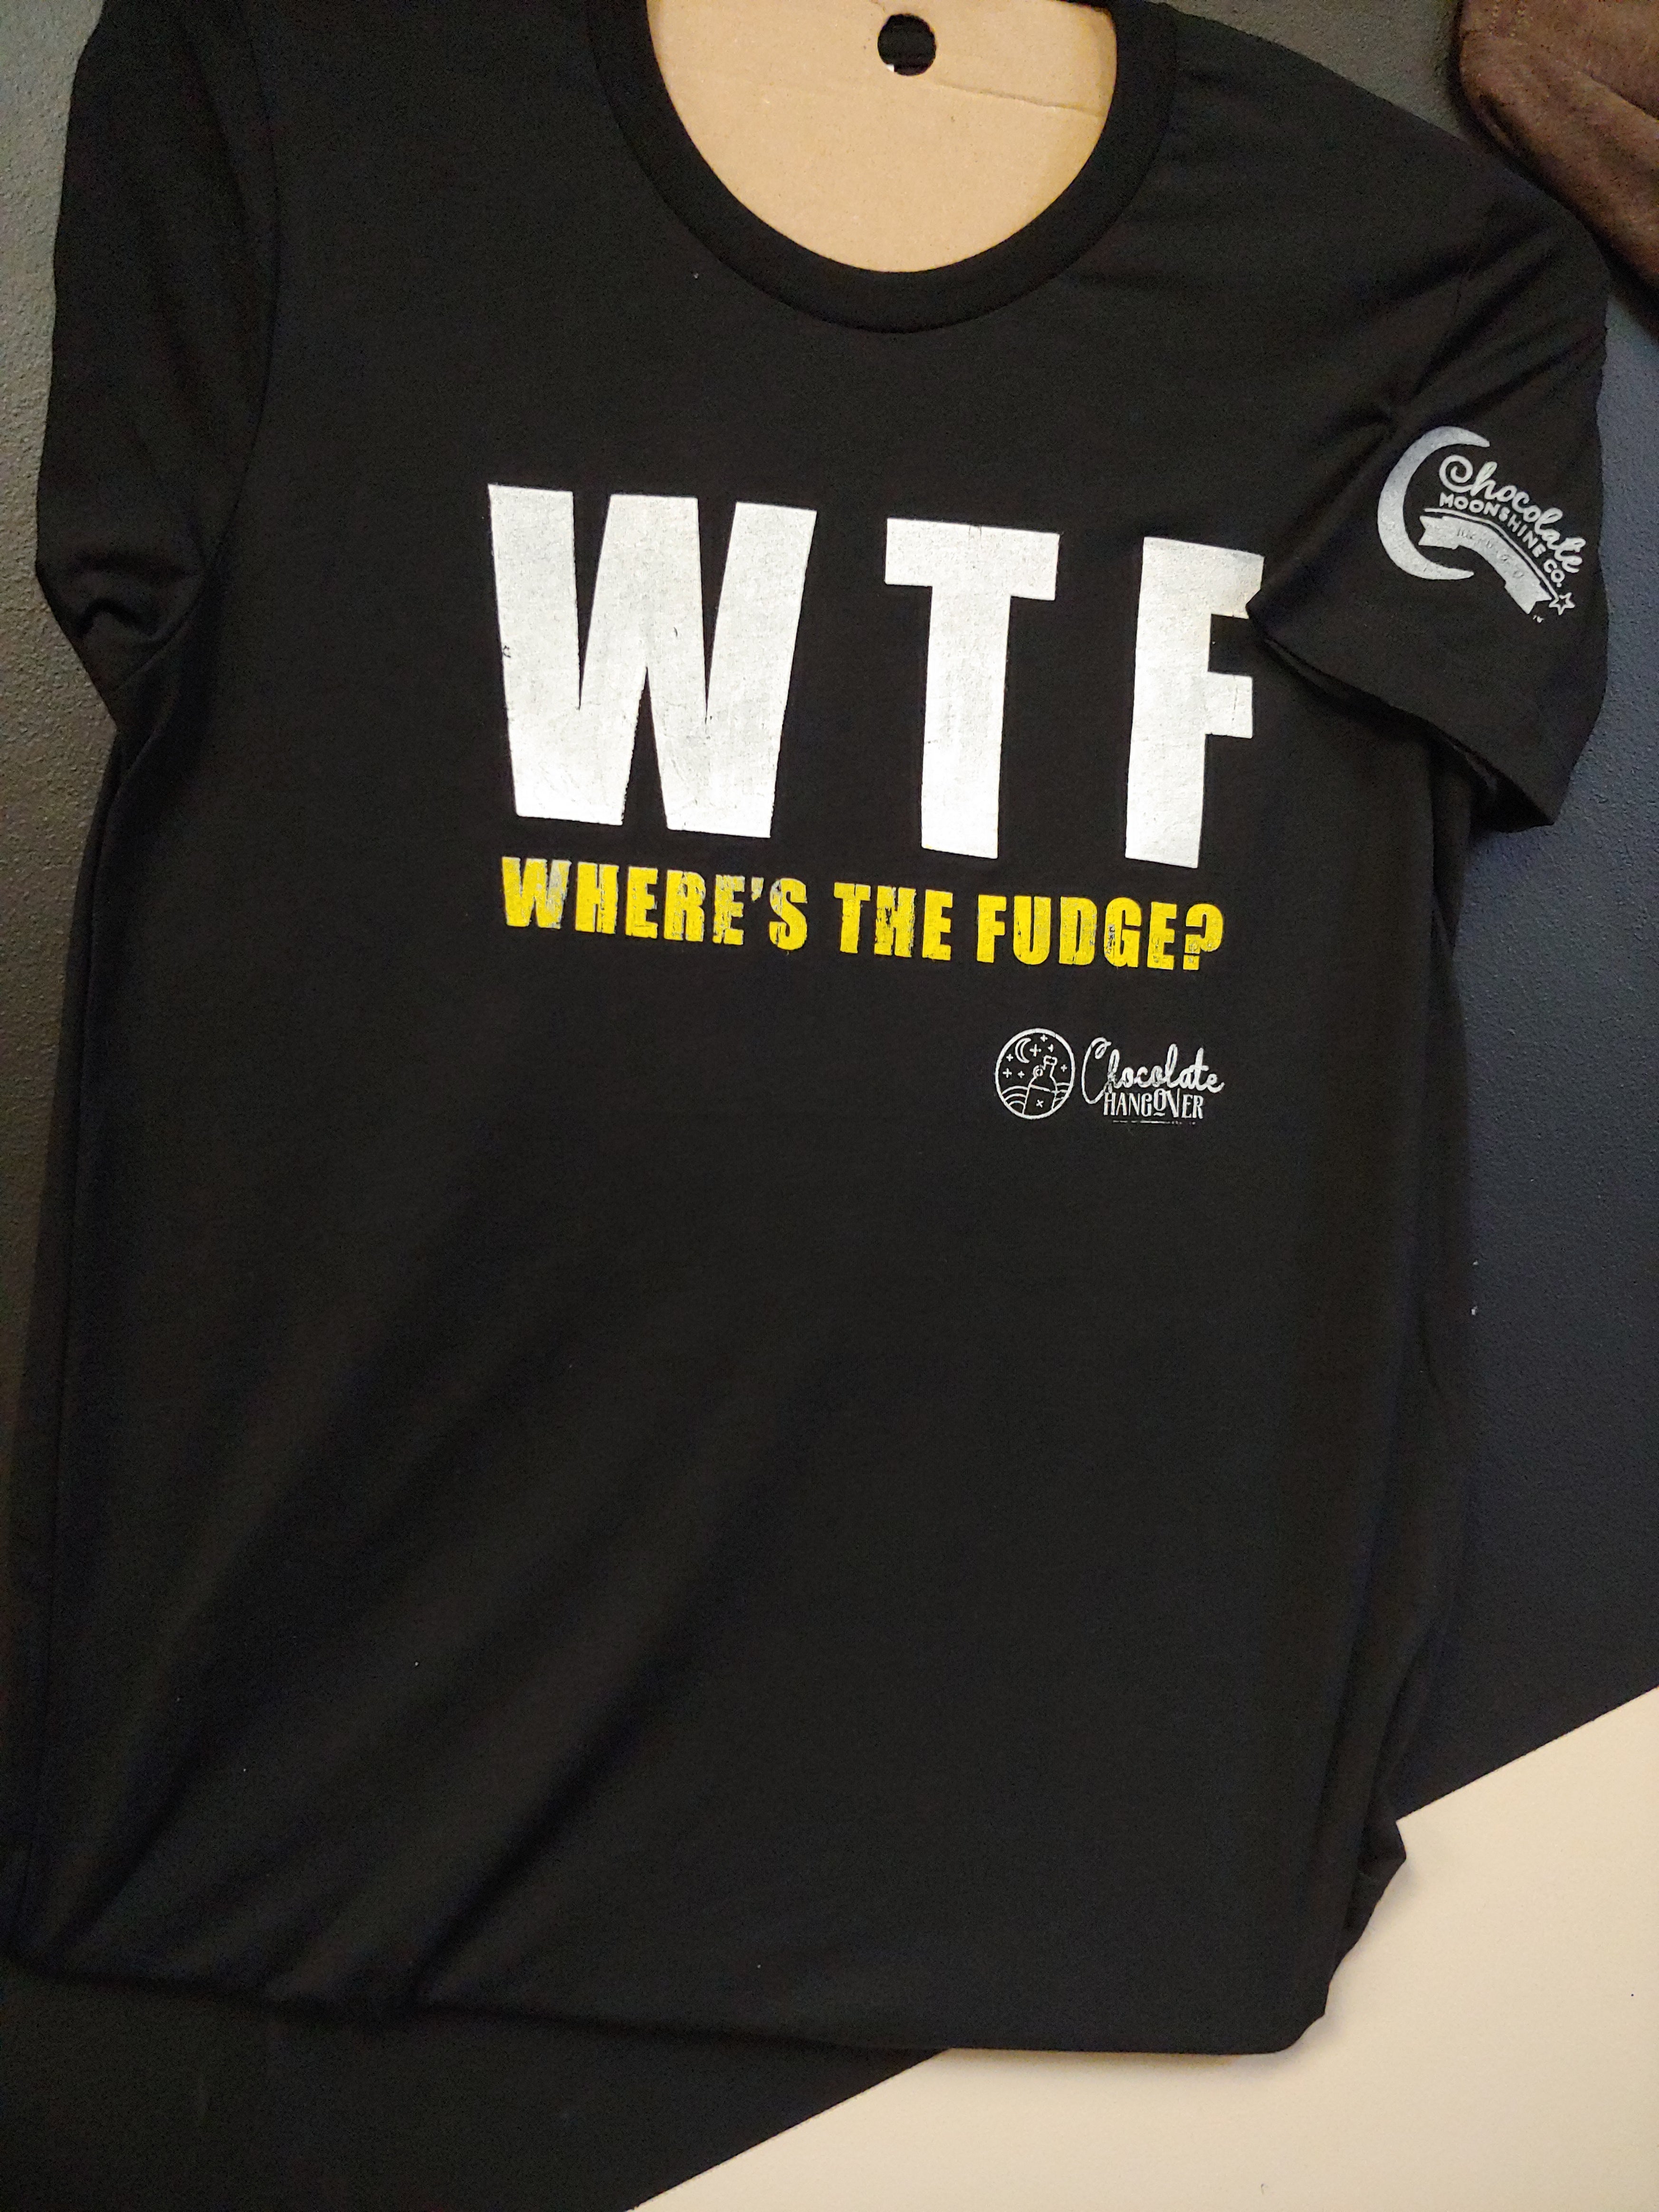 'WTF' Where's The Fudge? T-Shirt